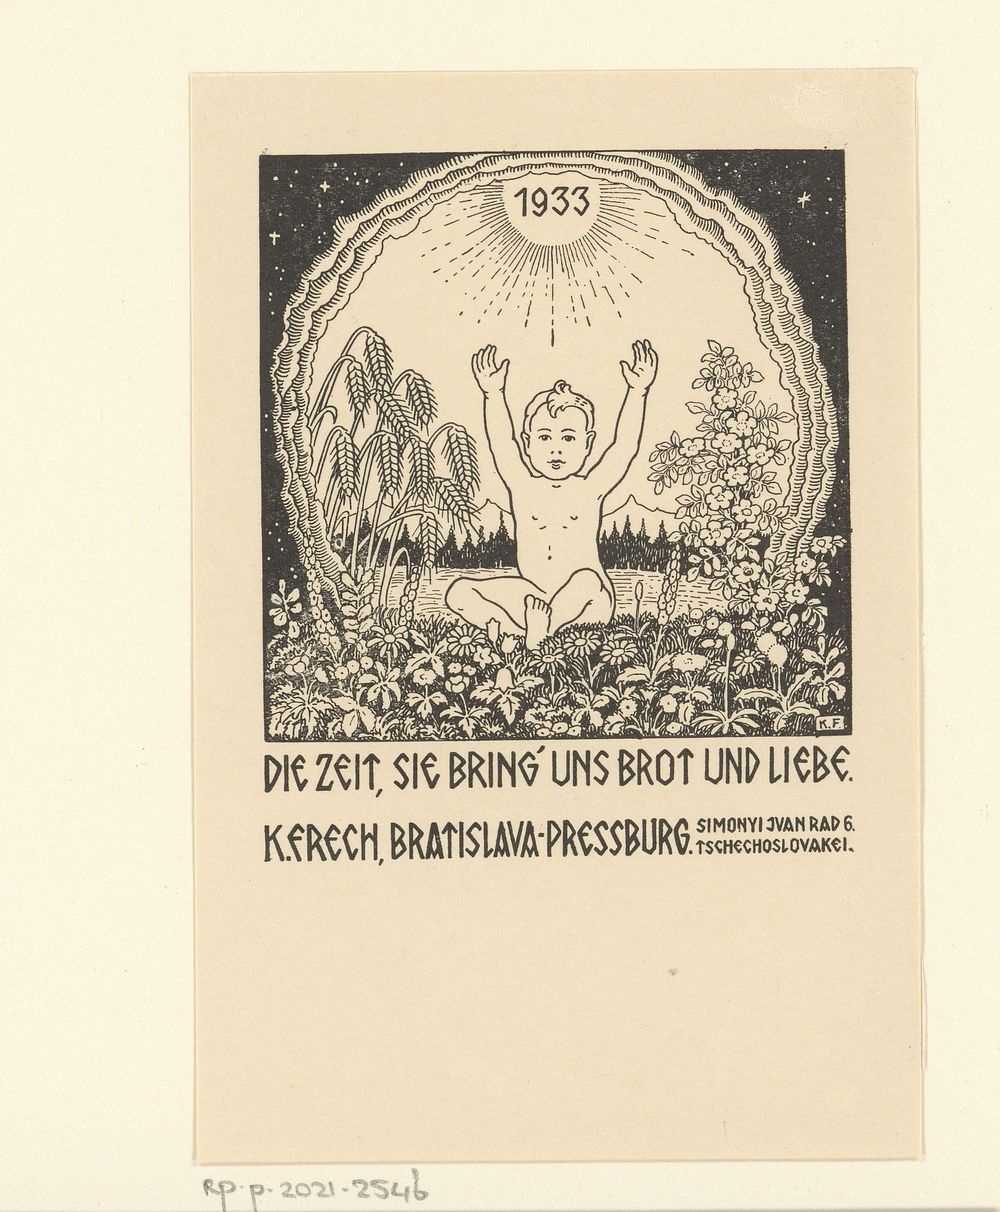 Kerst- en nieuwjaarswens voor 1933 van Karl Hugo Frech (1932) by anonymous and Karl Hugo Frech